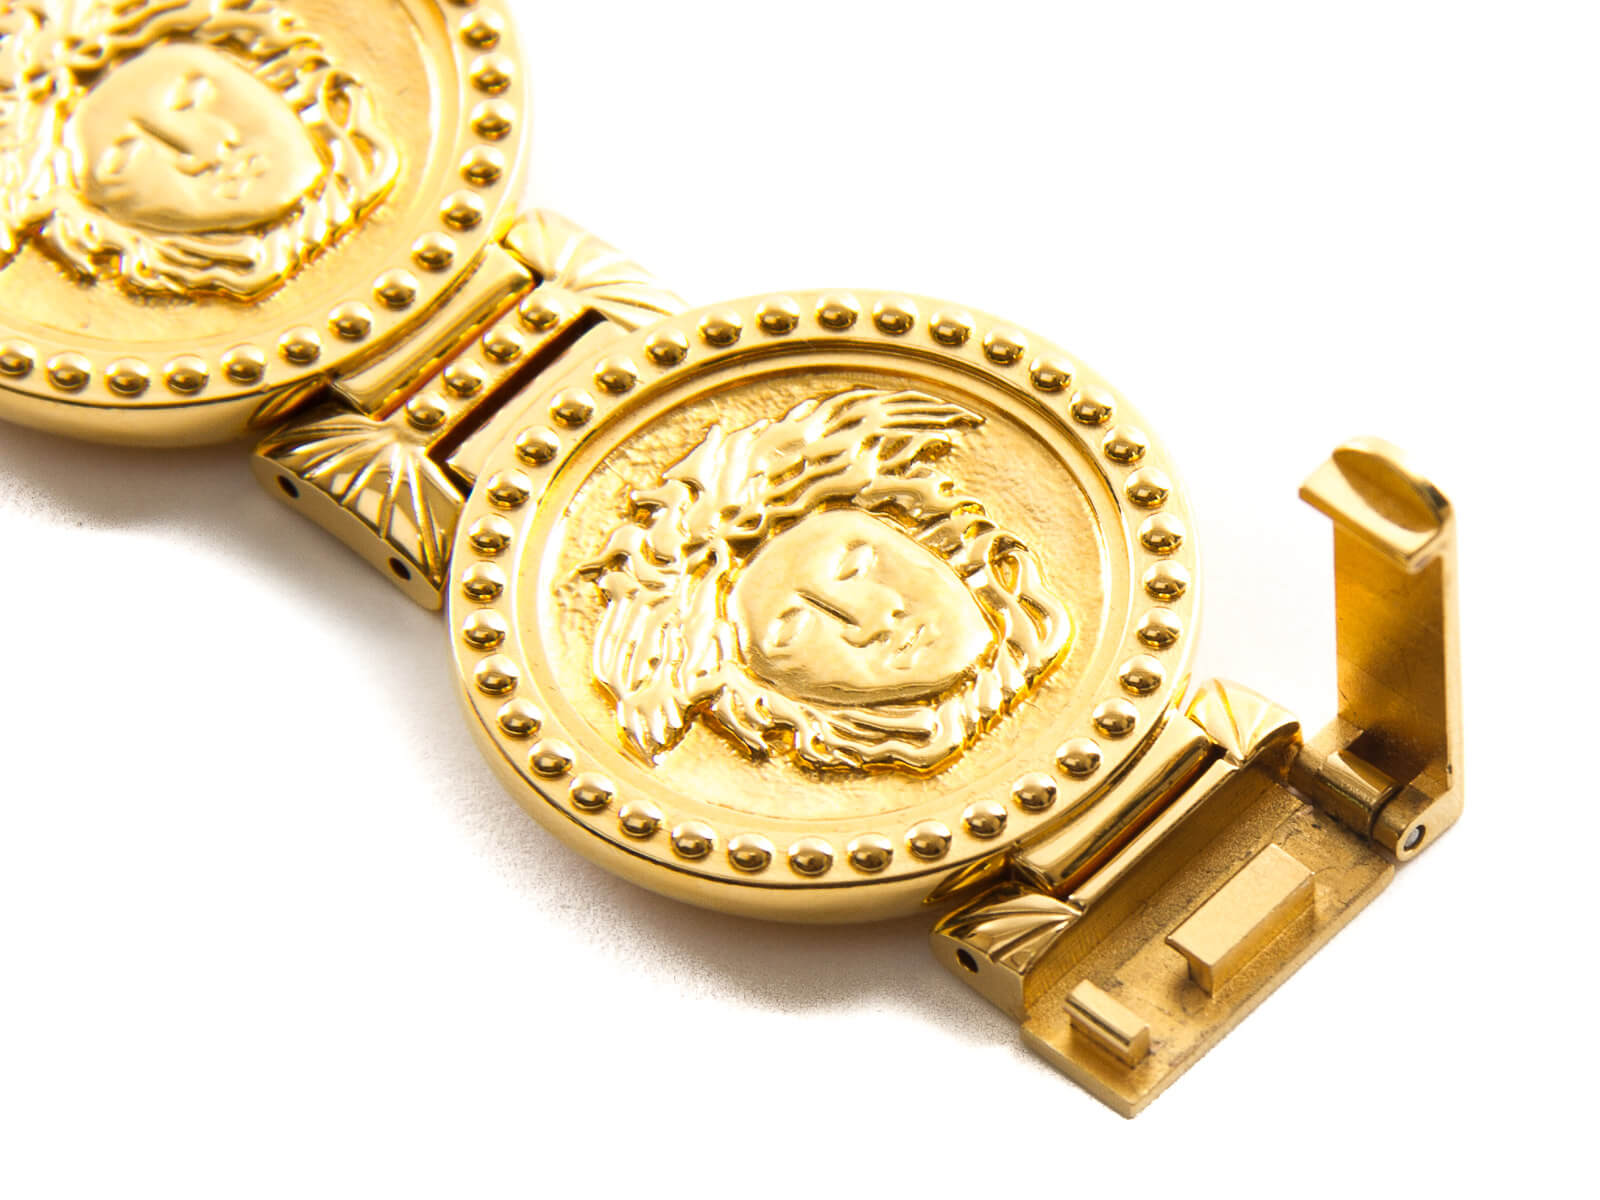 Gianni Versace Medusa Jewelry Wristwatch Golden Gold-plated ref